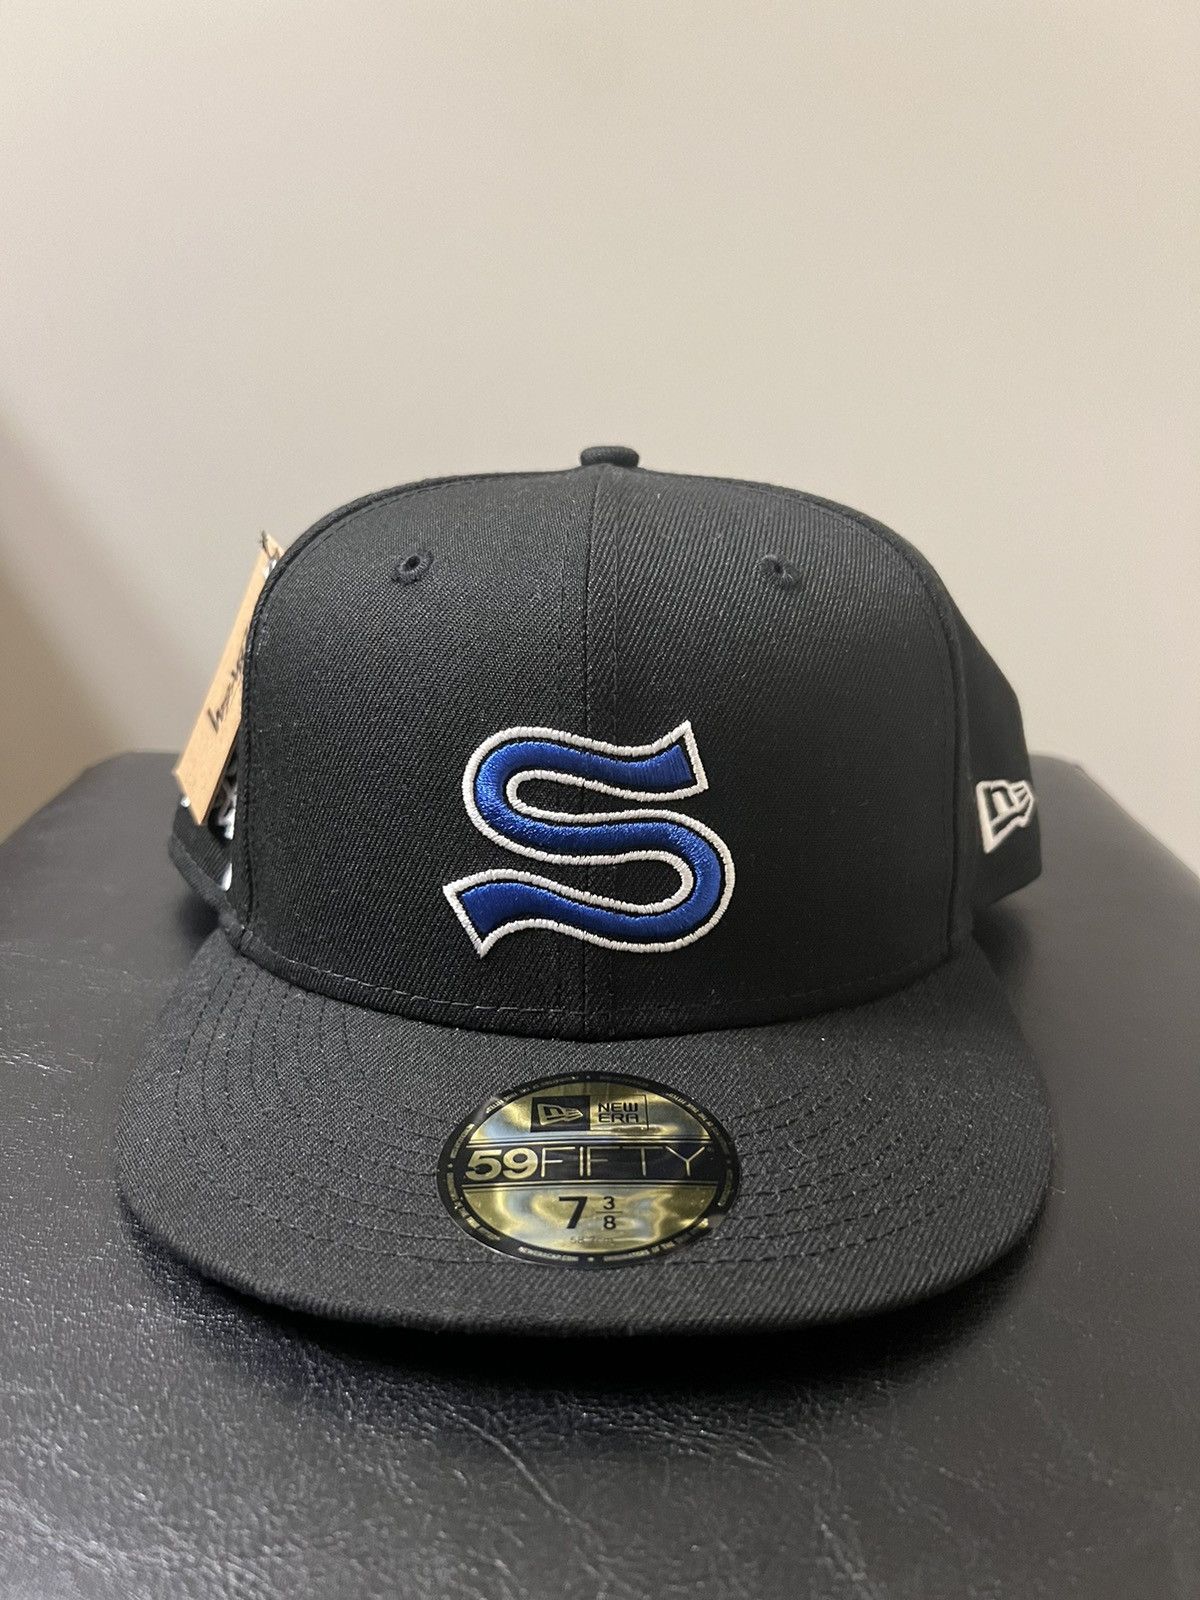 Stussy Stussy x New Era S Emblem Fitted Hat Black 7 5/8 | Grailed